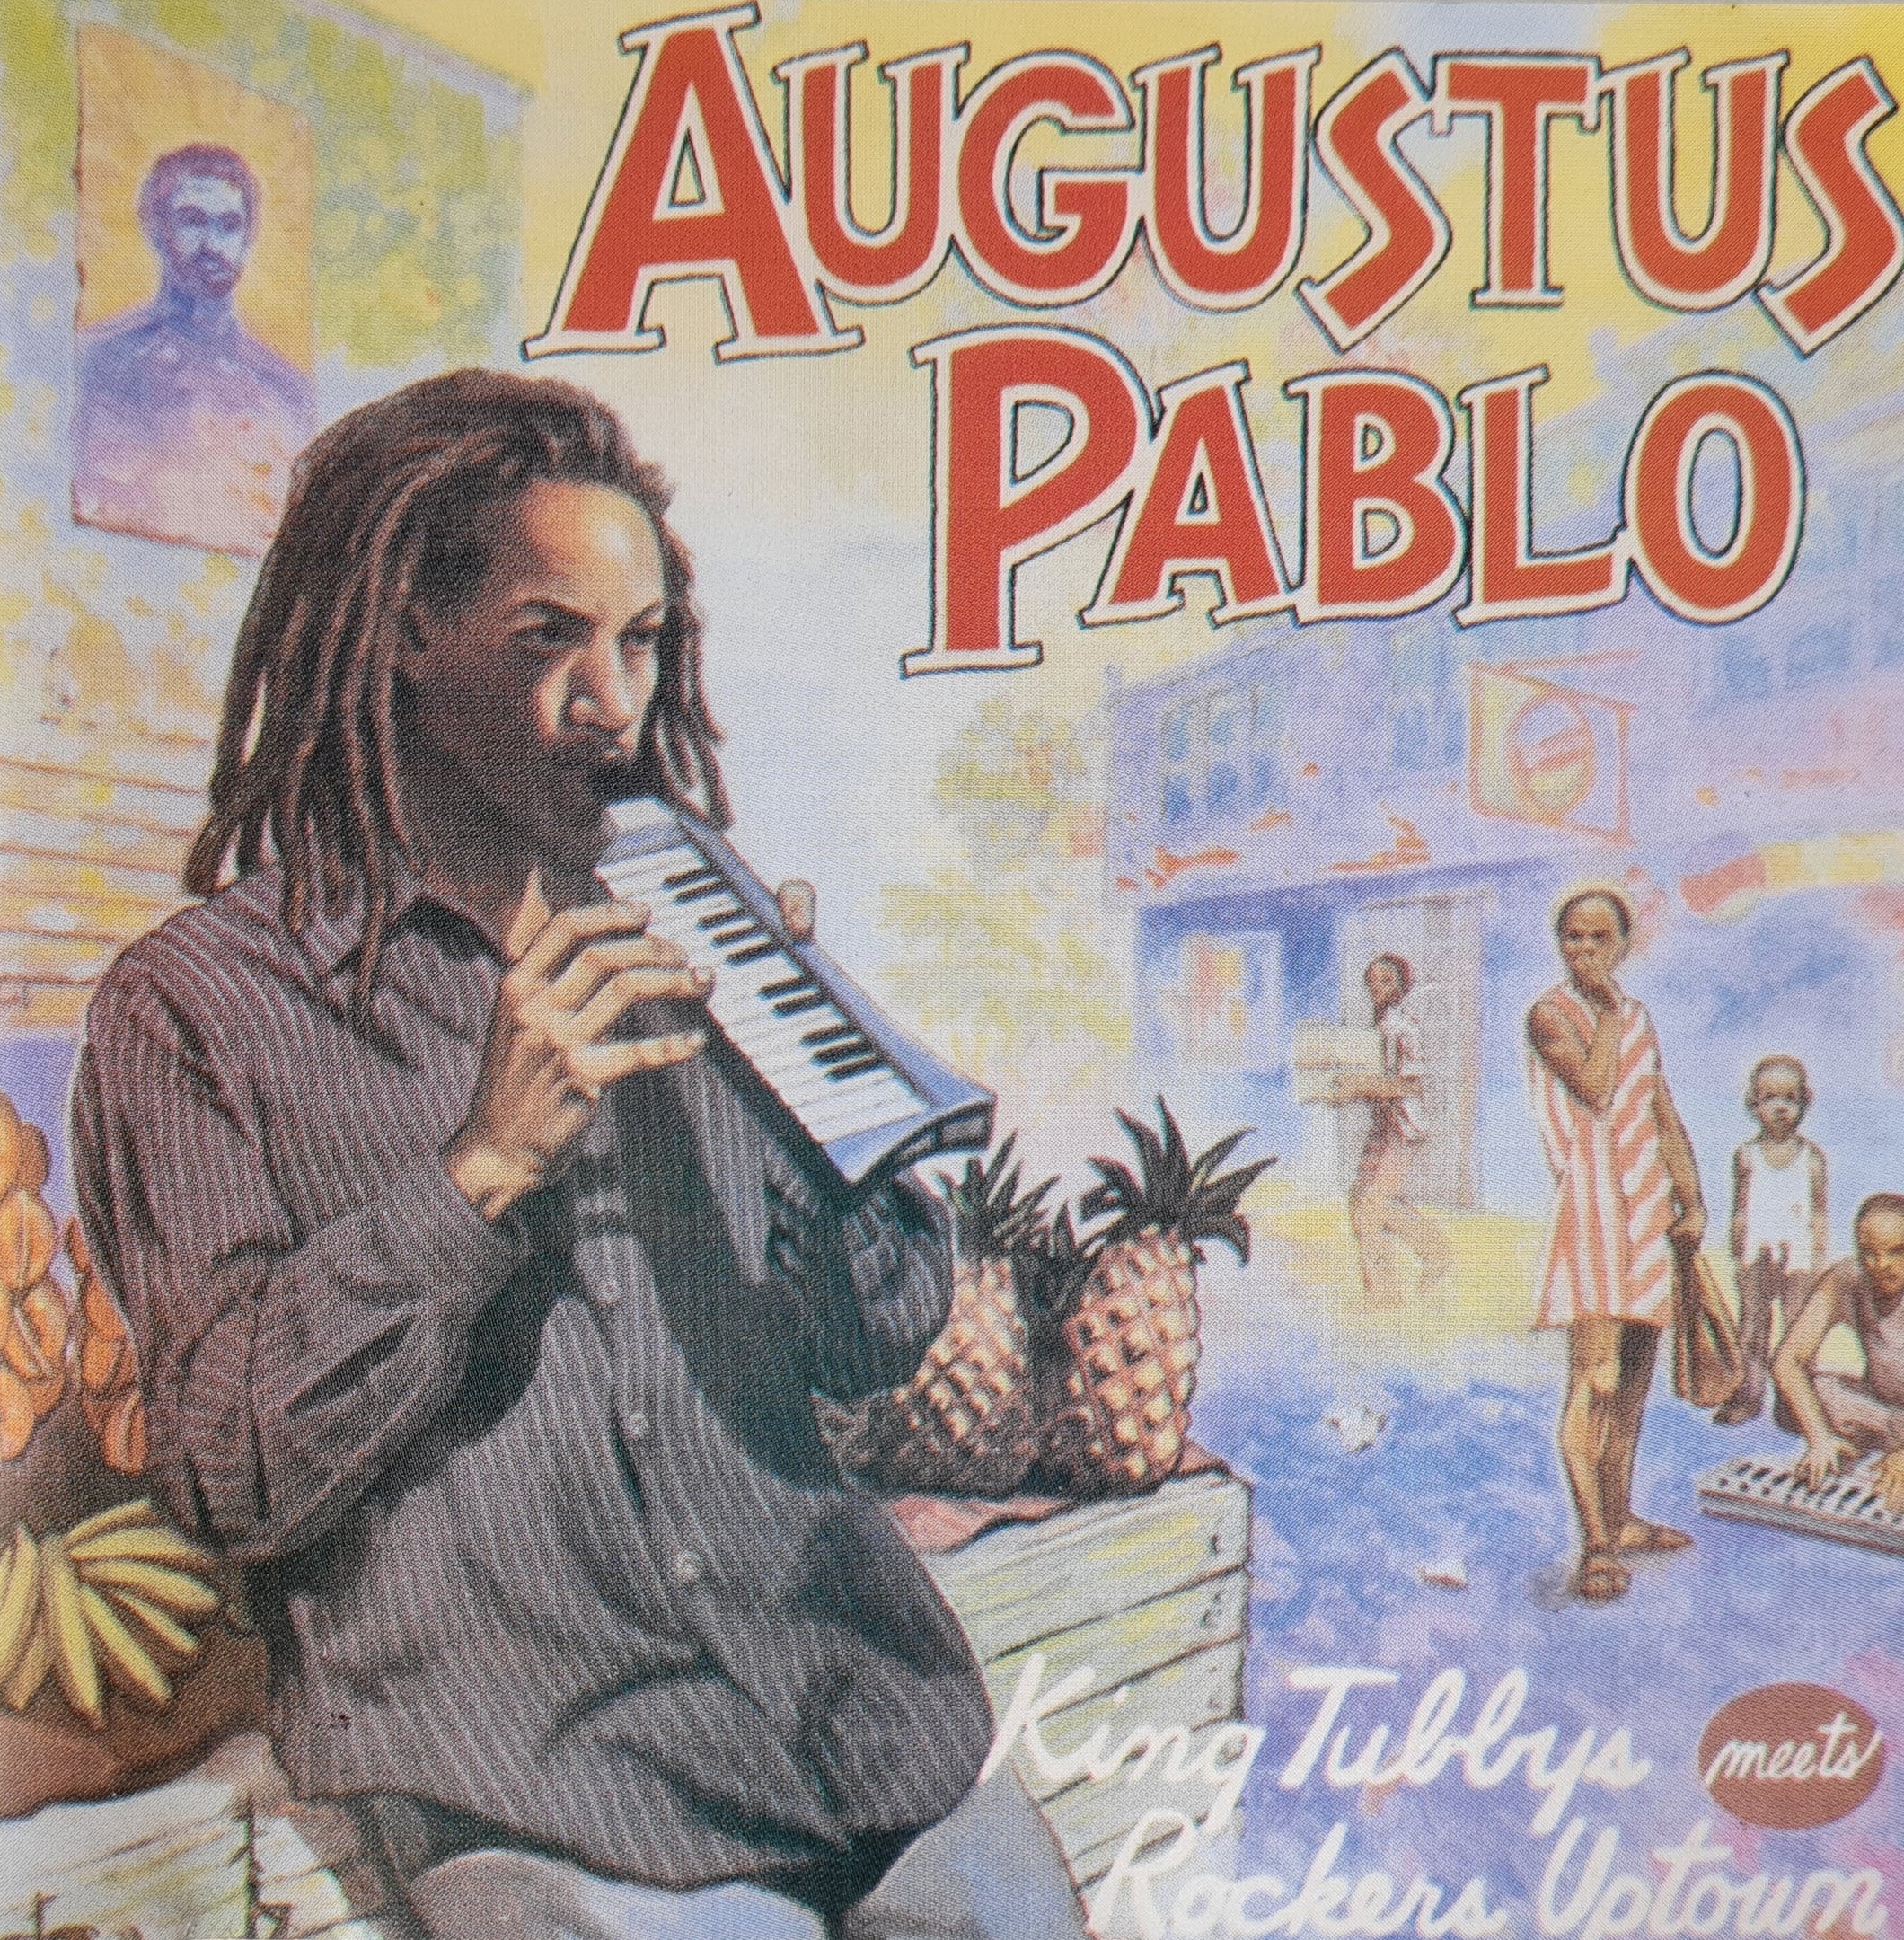 Augustus Pablo - King Tubbys Meets Rockers Uptown (CD)